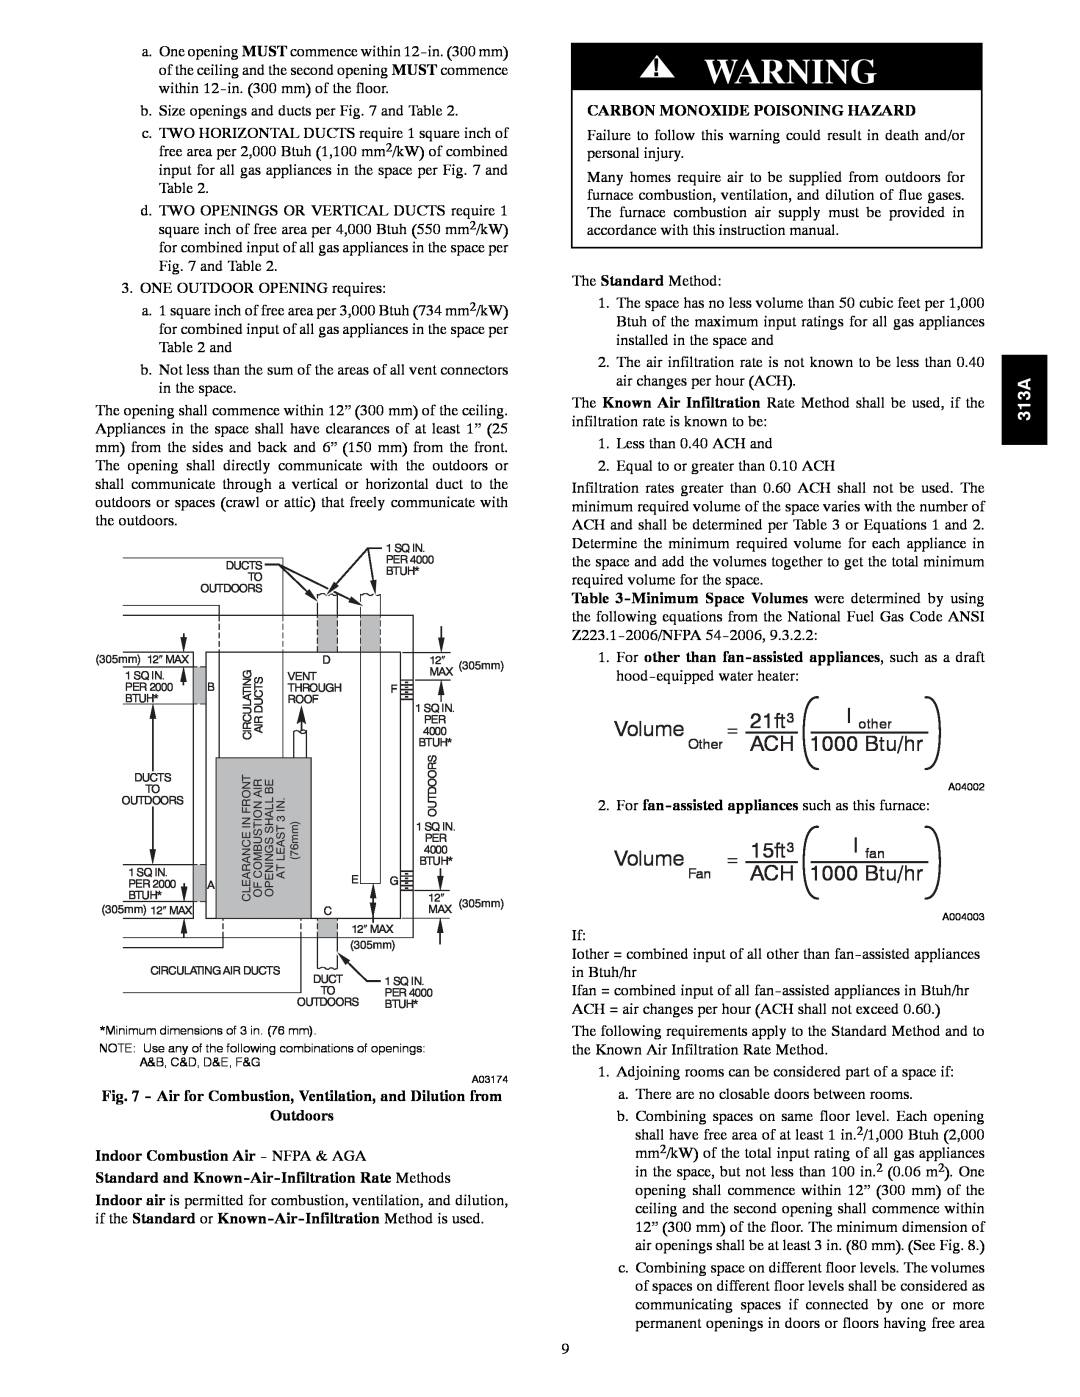 Bryant 313AAV instruction manual Volume, 21ft3, 1000 Btu/hr, 15ft3 